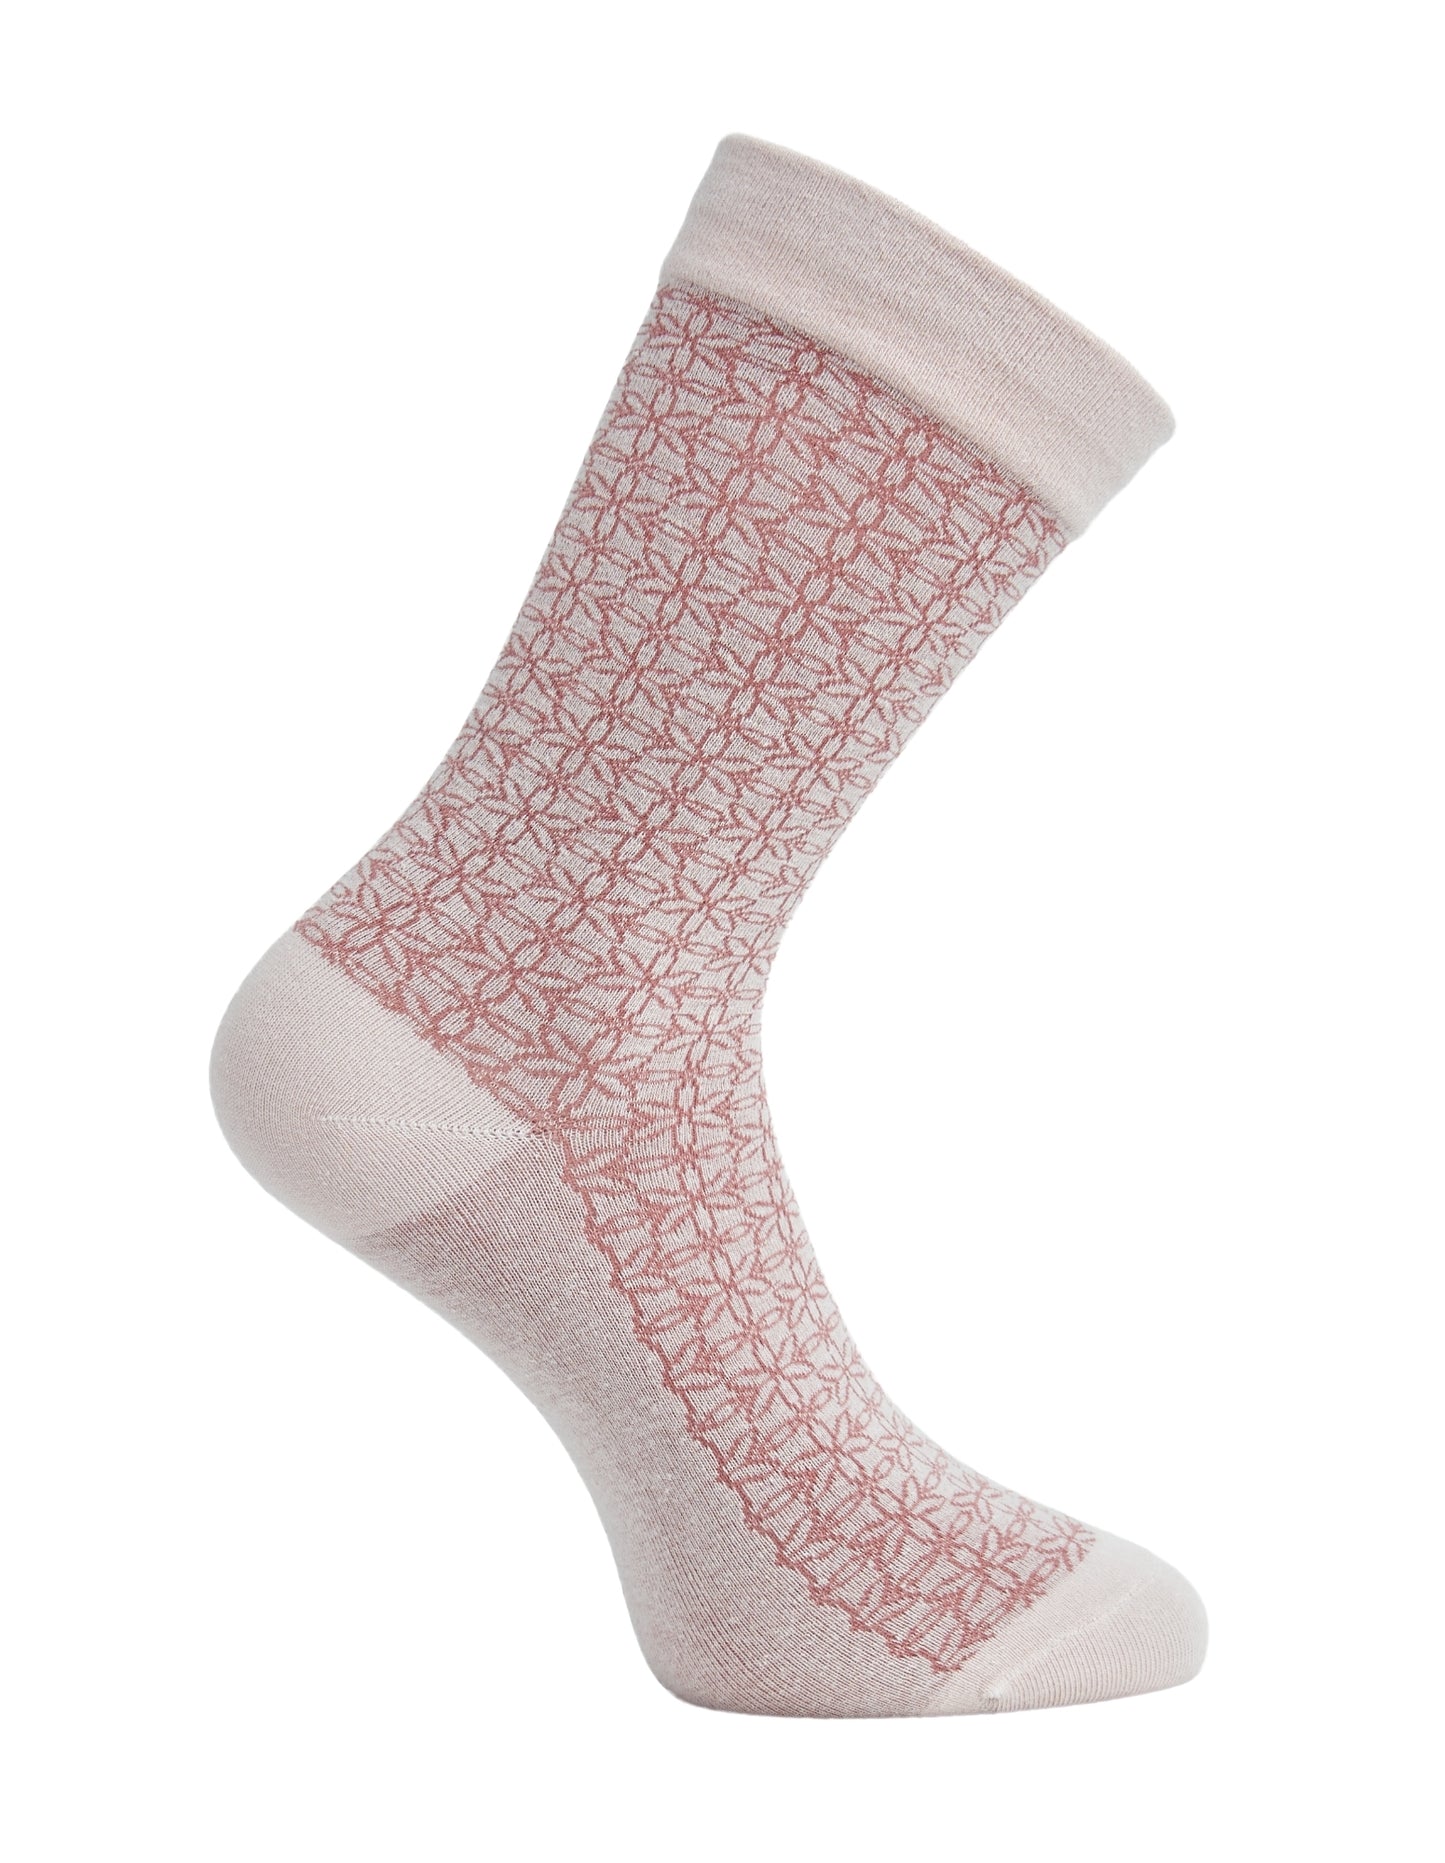 Side of Simon de Winter Women's Circulation Comfort Cotton Crew Socks in Smokey Rose